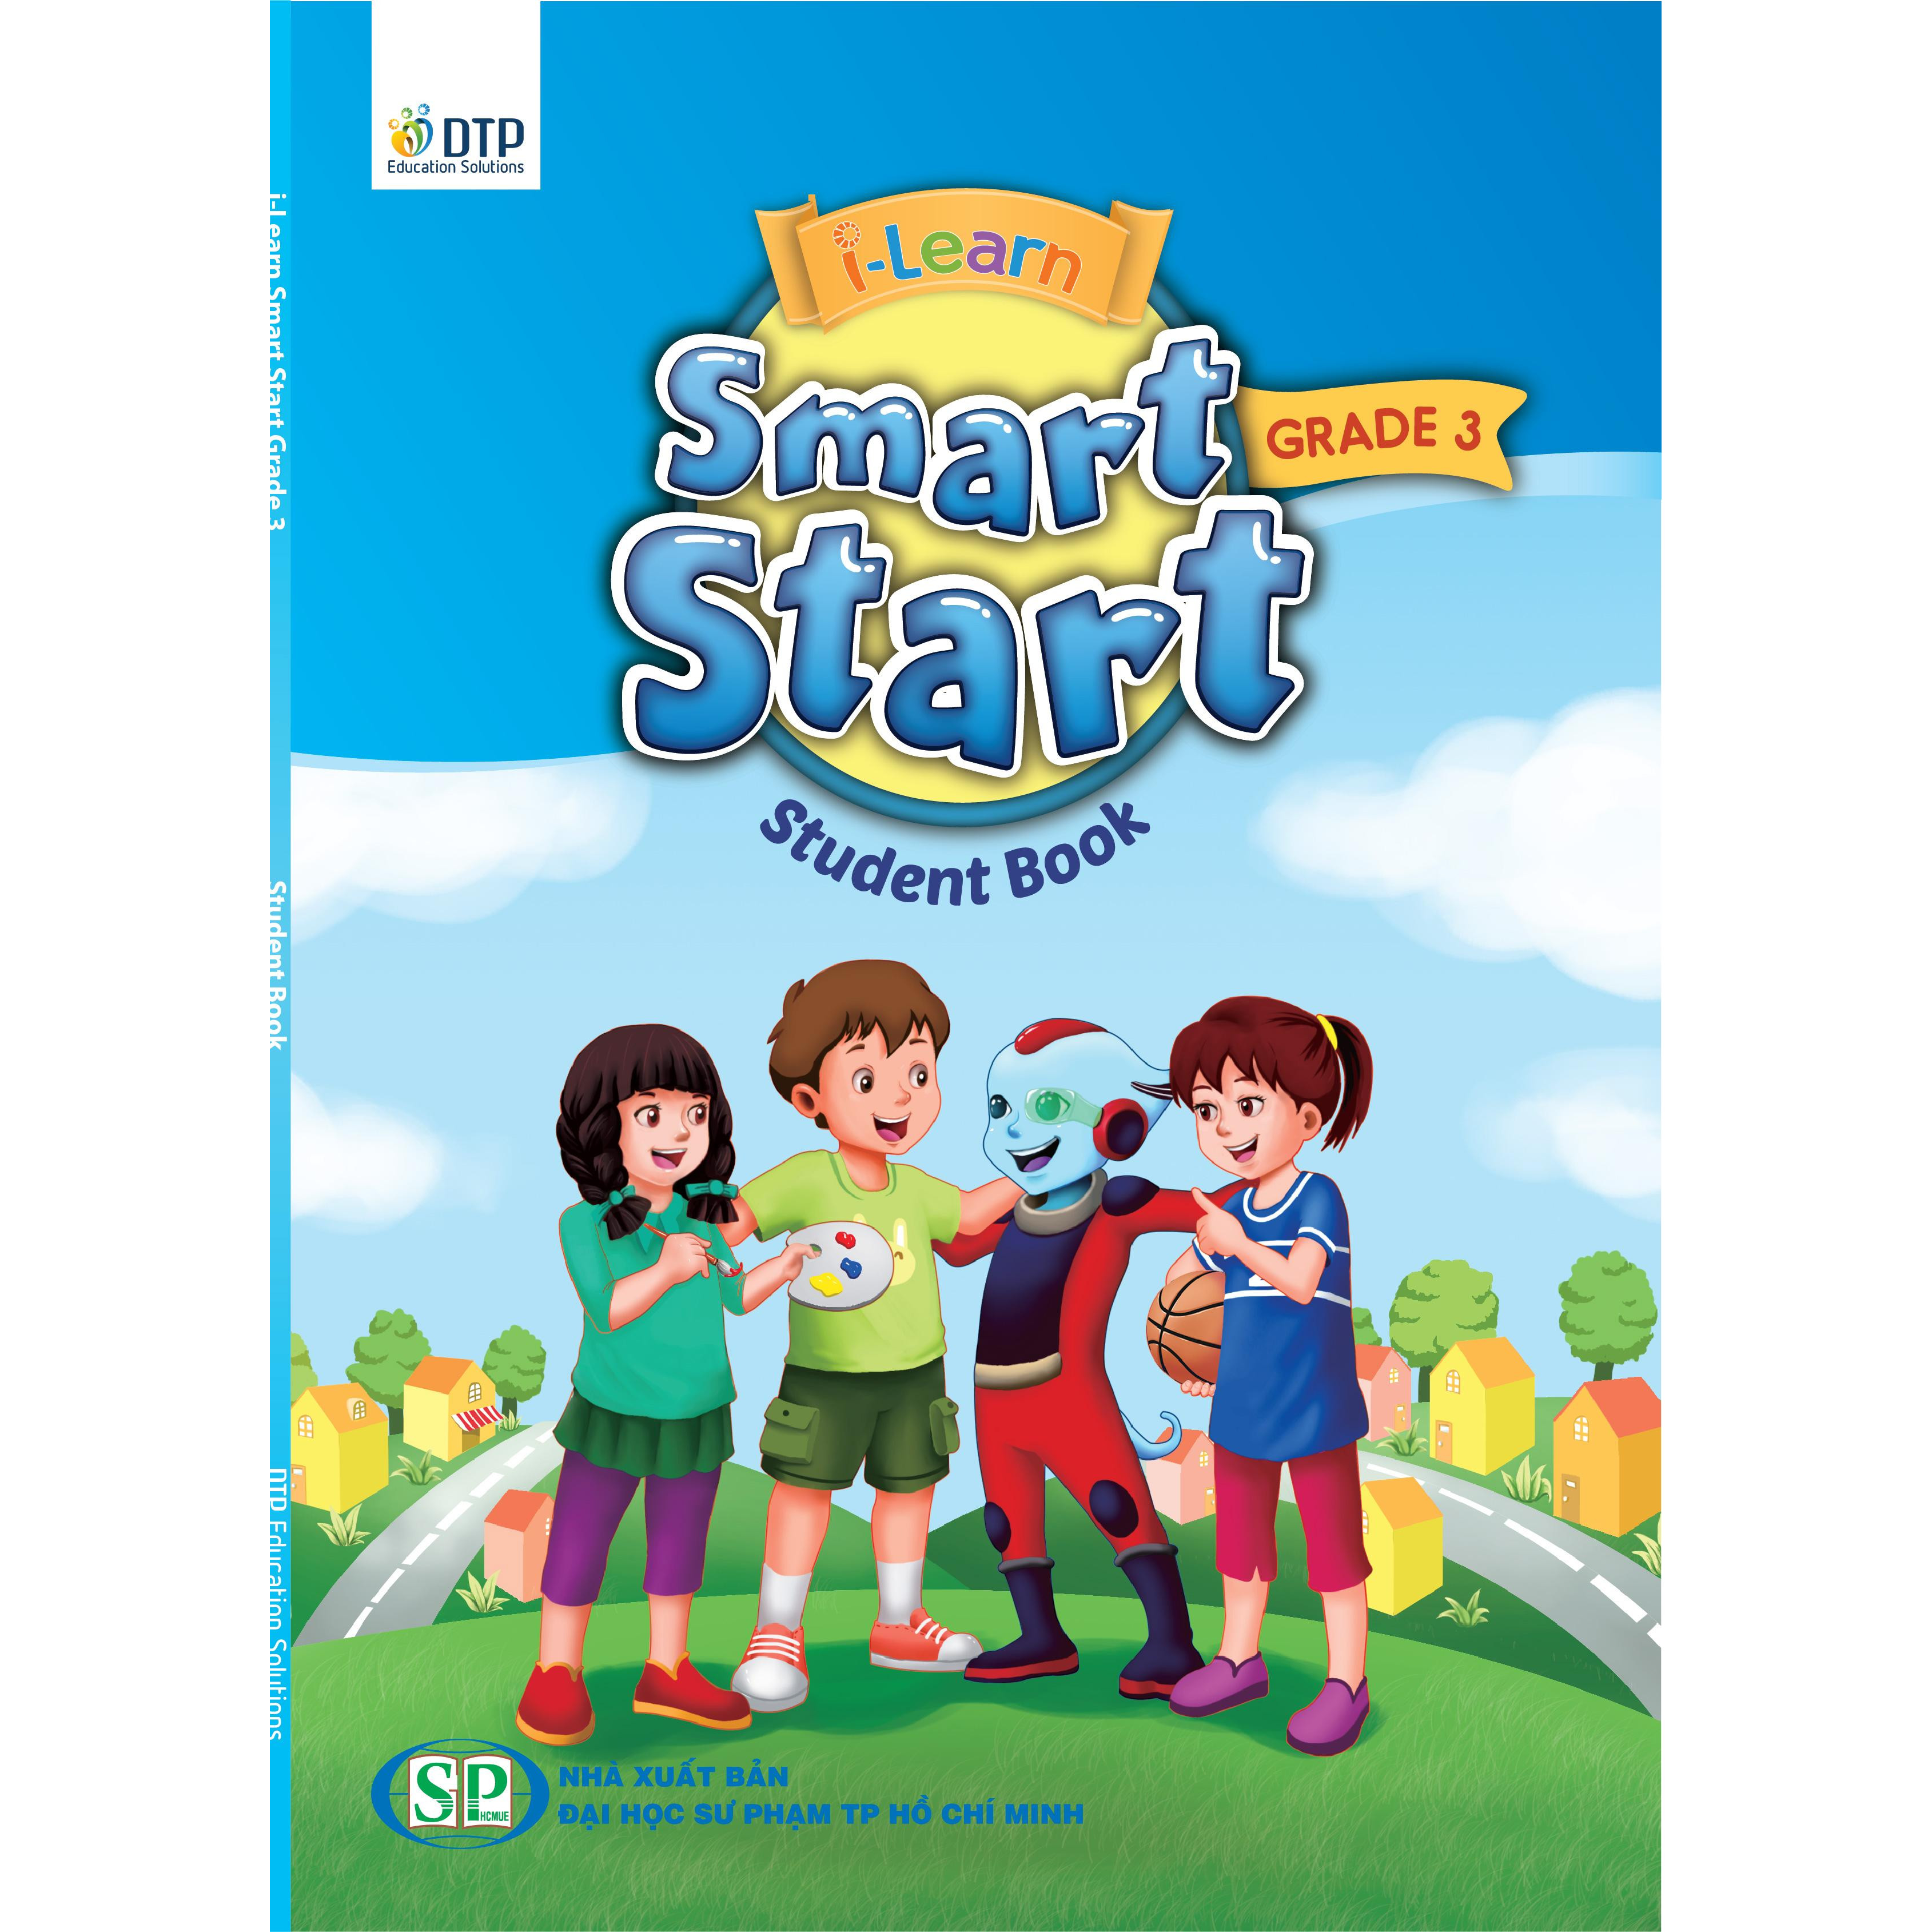 i-Learn Smart Start Grade 3 Students Book